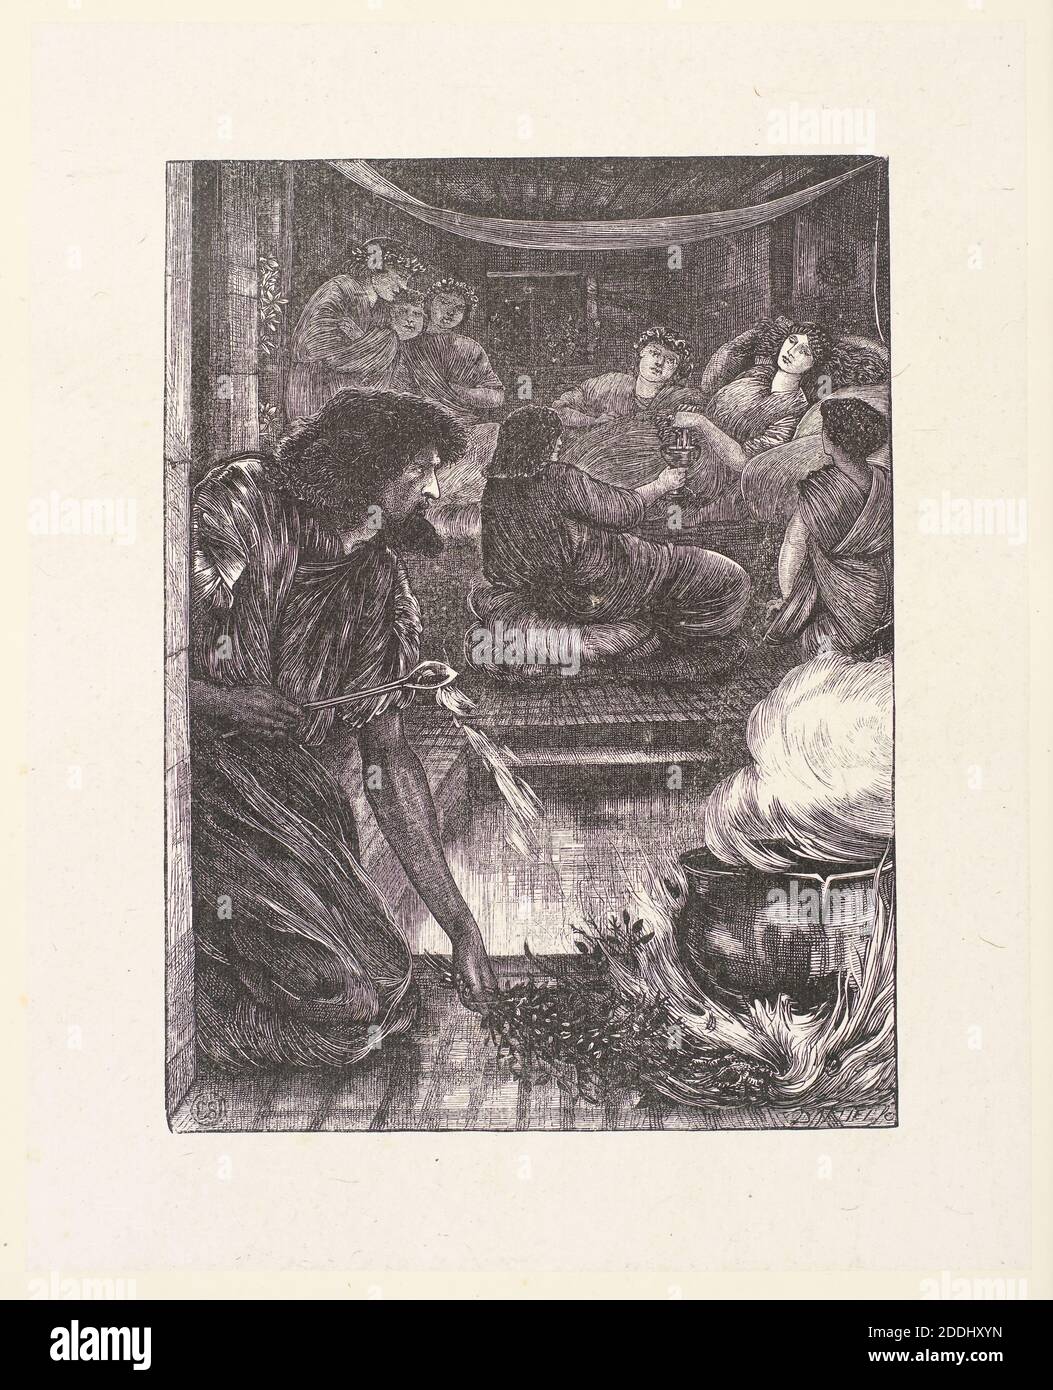 Dalziels' Bible Gallery-Ezekiel and the Boiling Pot, 1863, Artist: Sir Edward Burne-Jones, Engraver: Dalziel Brothers, Publisher: George Routledge & Sons Stock Photo